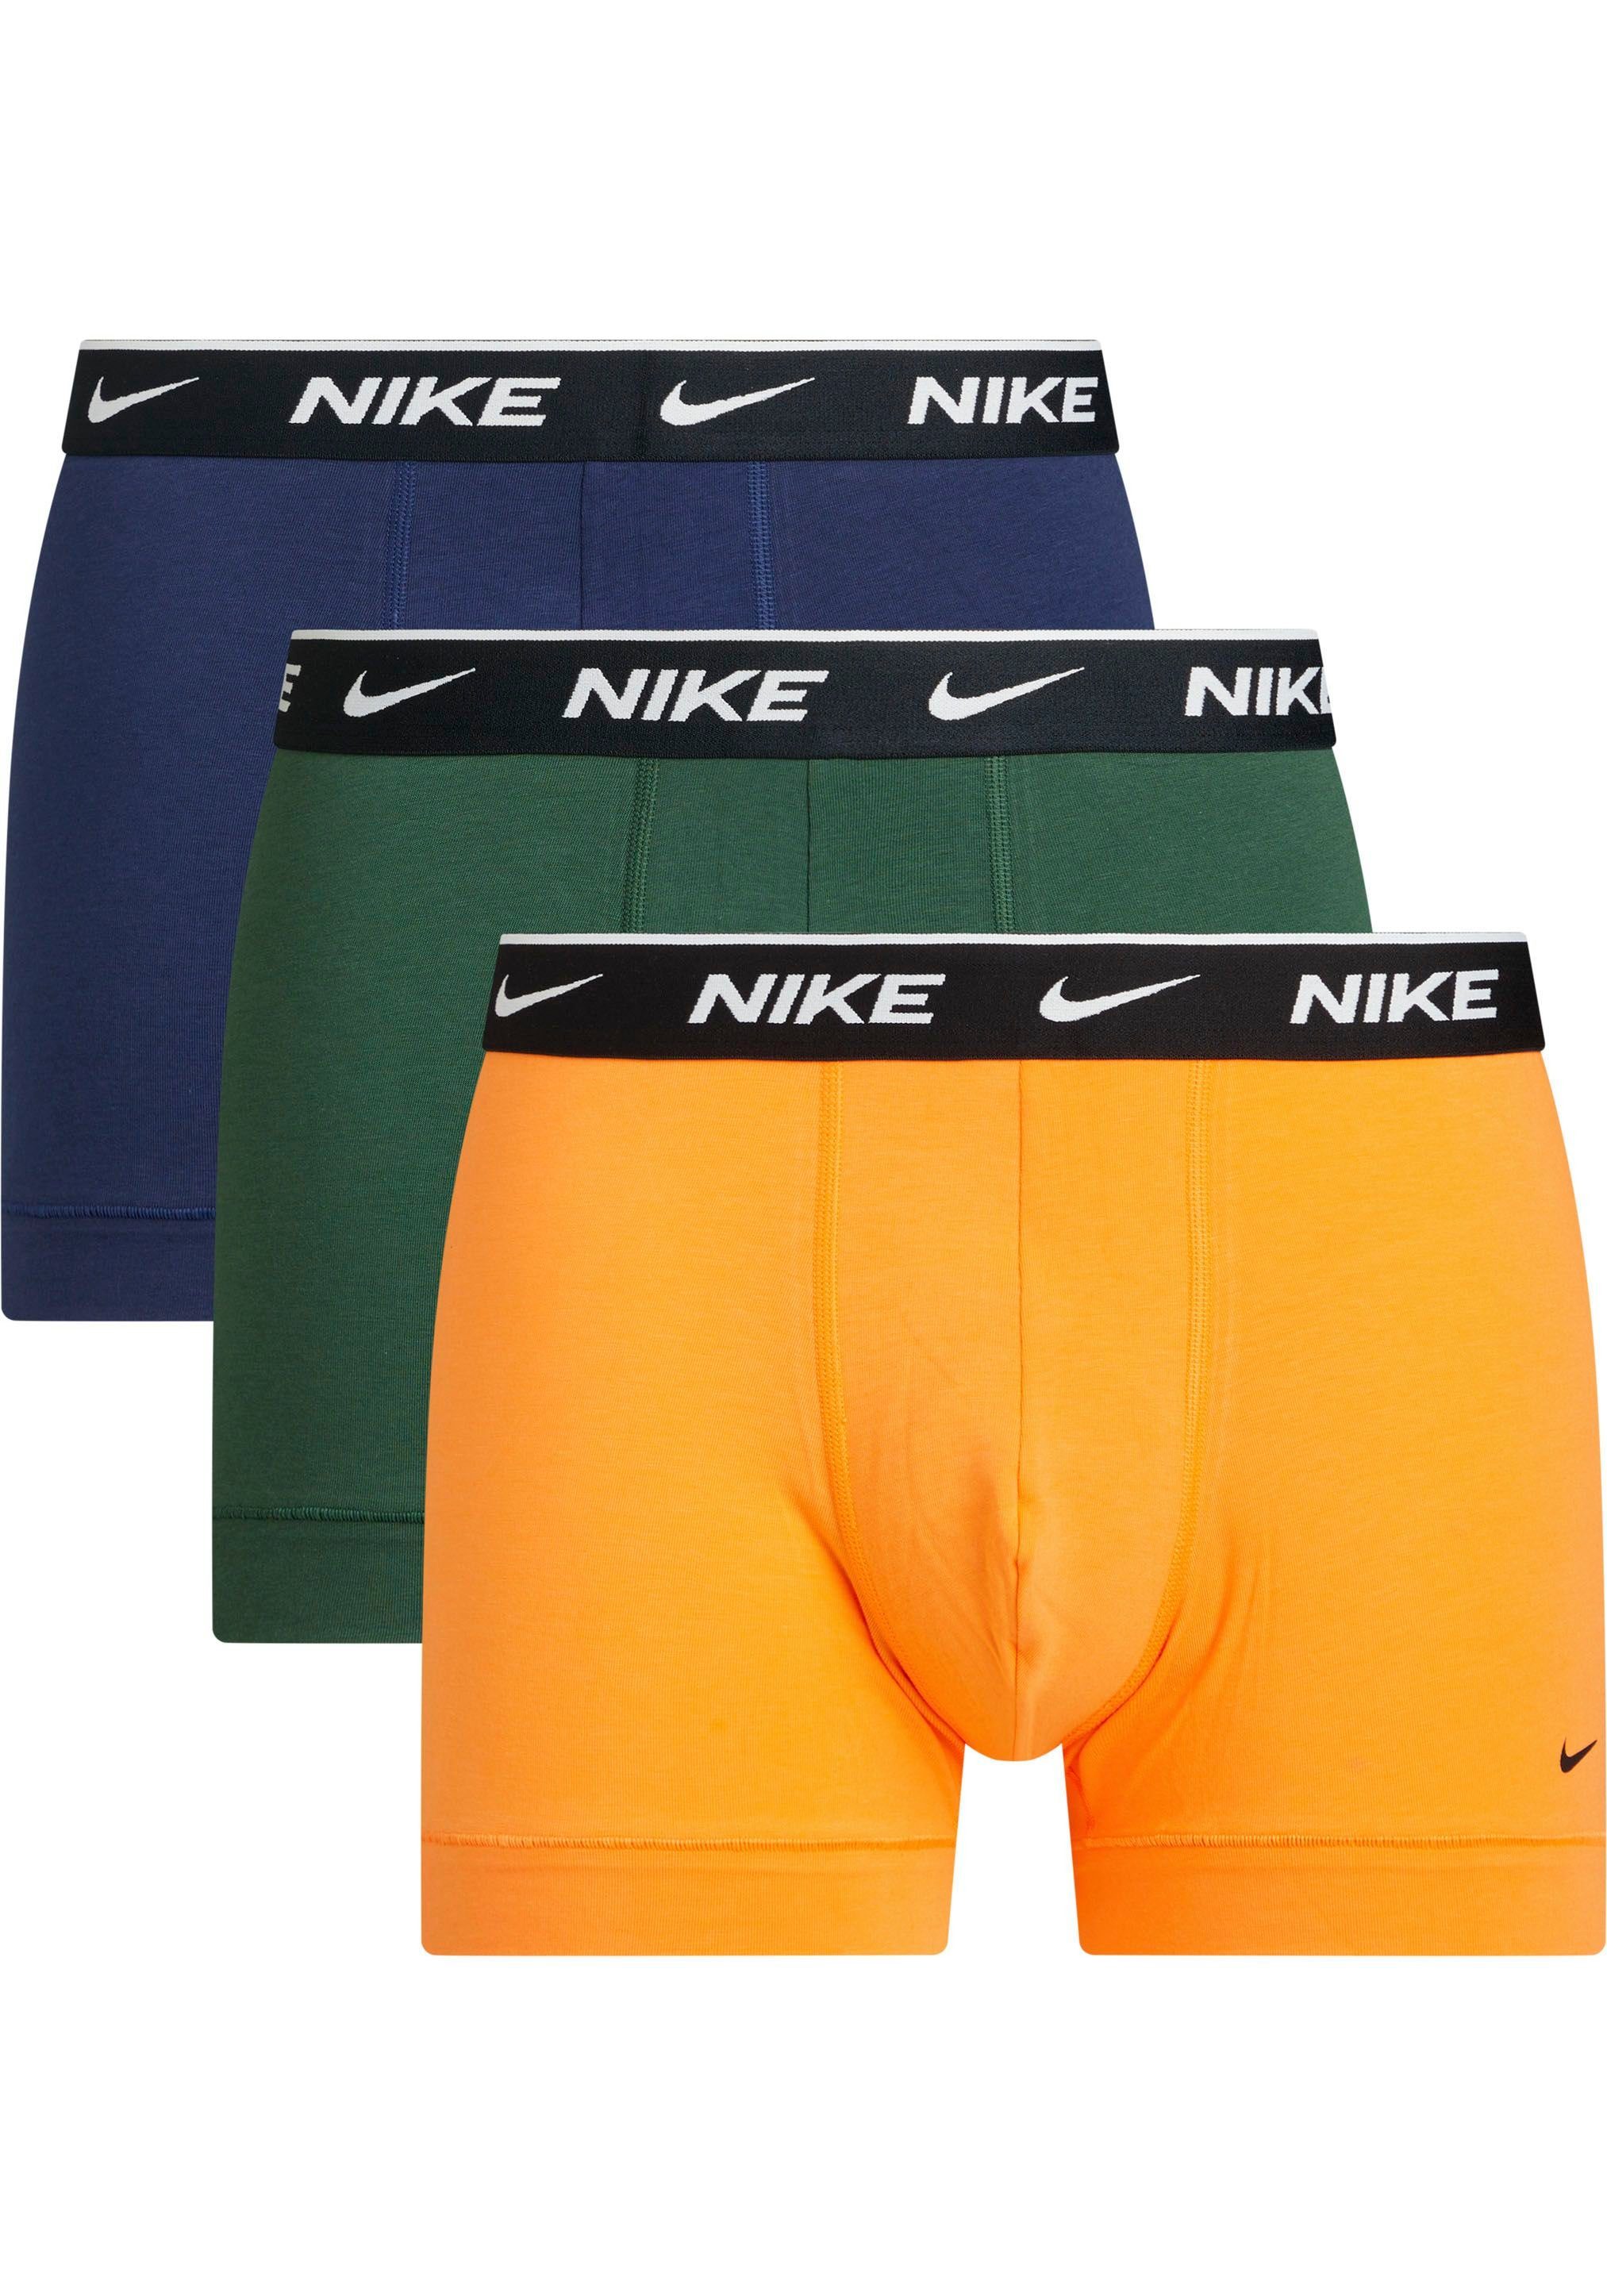 NIKE Underwear Trunk TRUNK 3PK (Packung, 3er-Pack) mit NIKE Logo-Elastikbund (3 Stück) HPR_RYL/BRGHT_MNDRN/STDM_GREEN